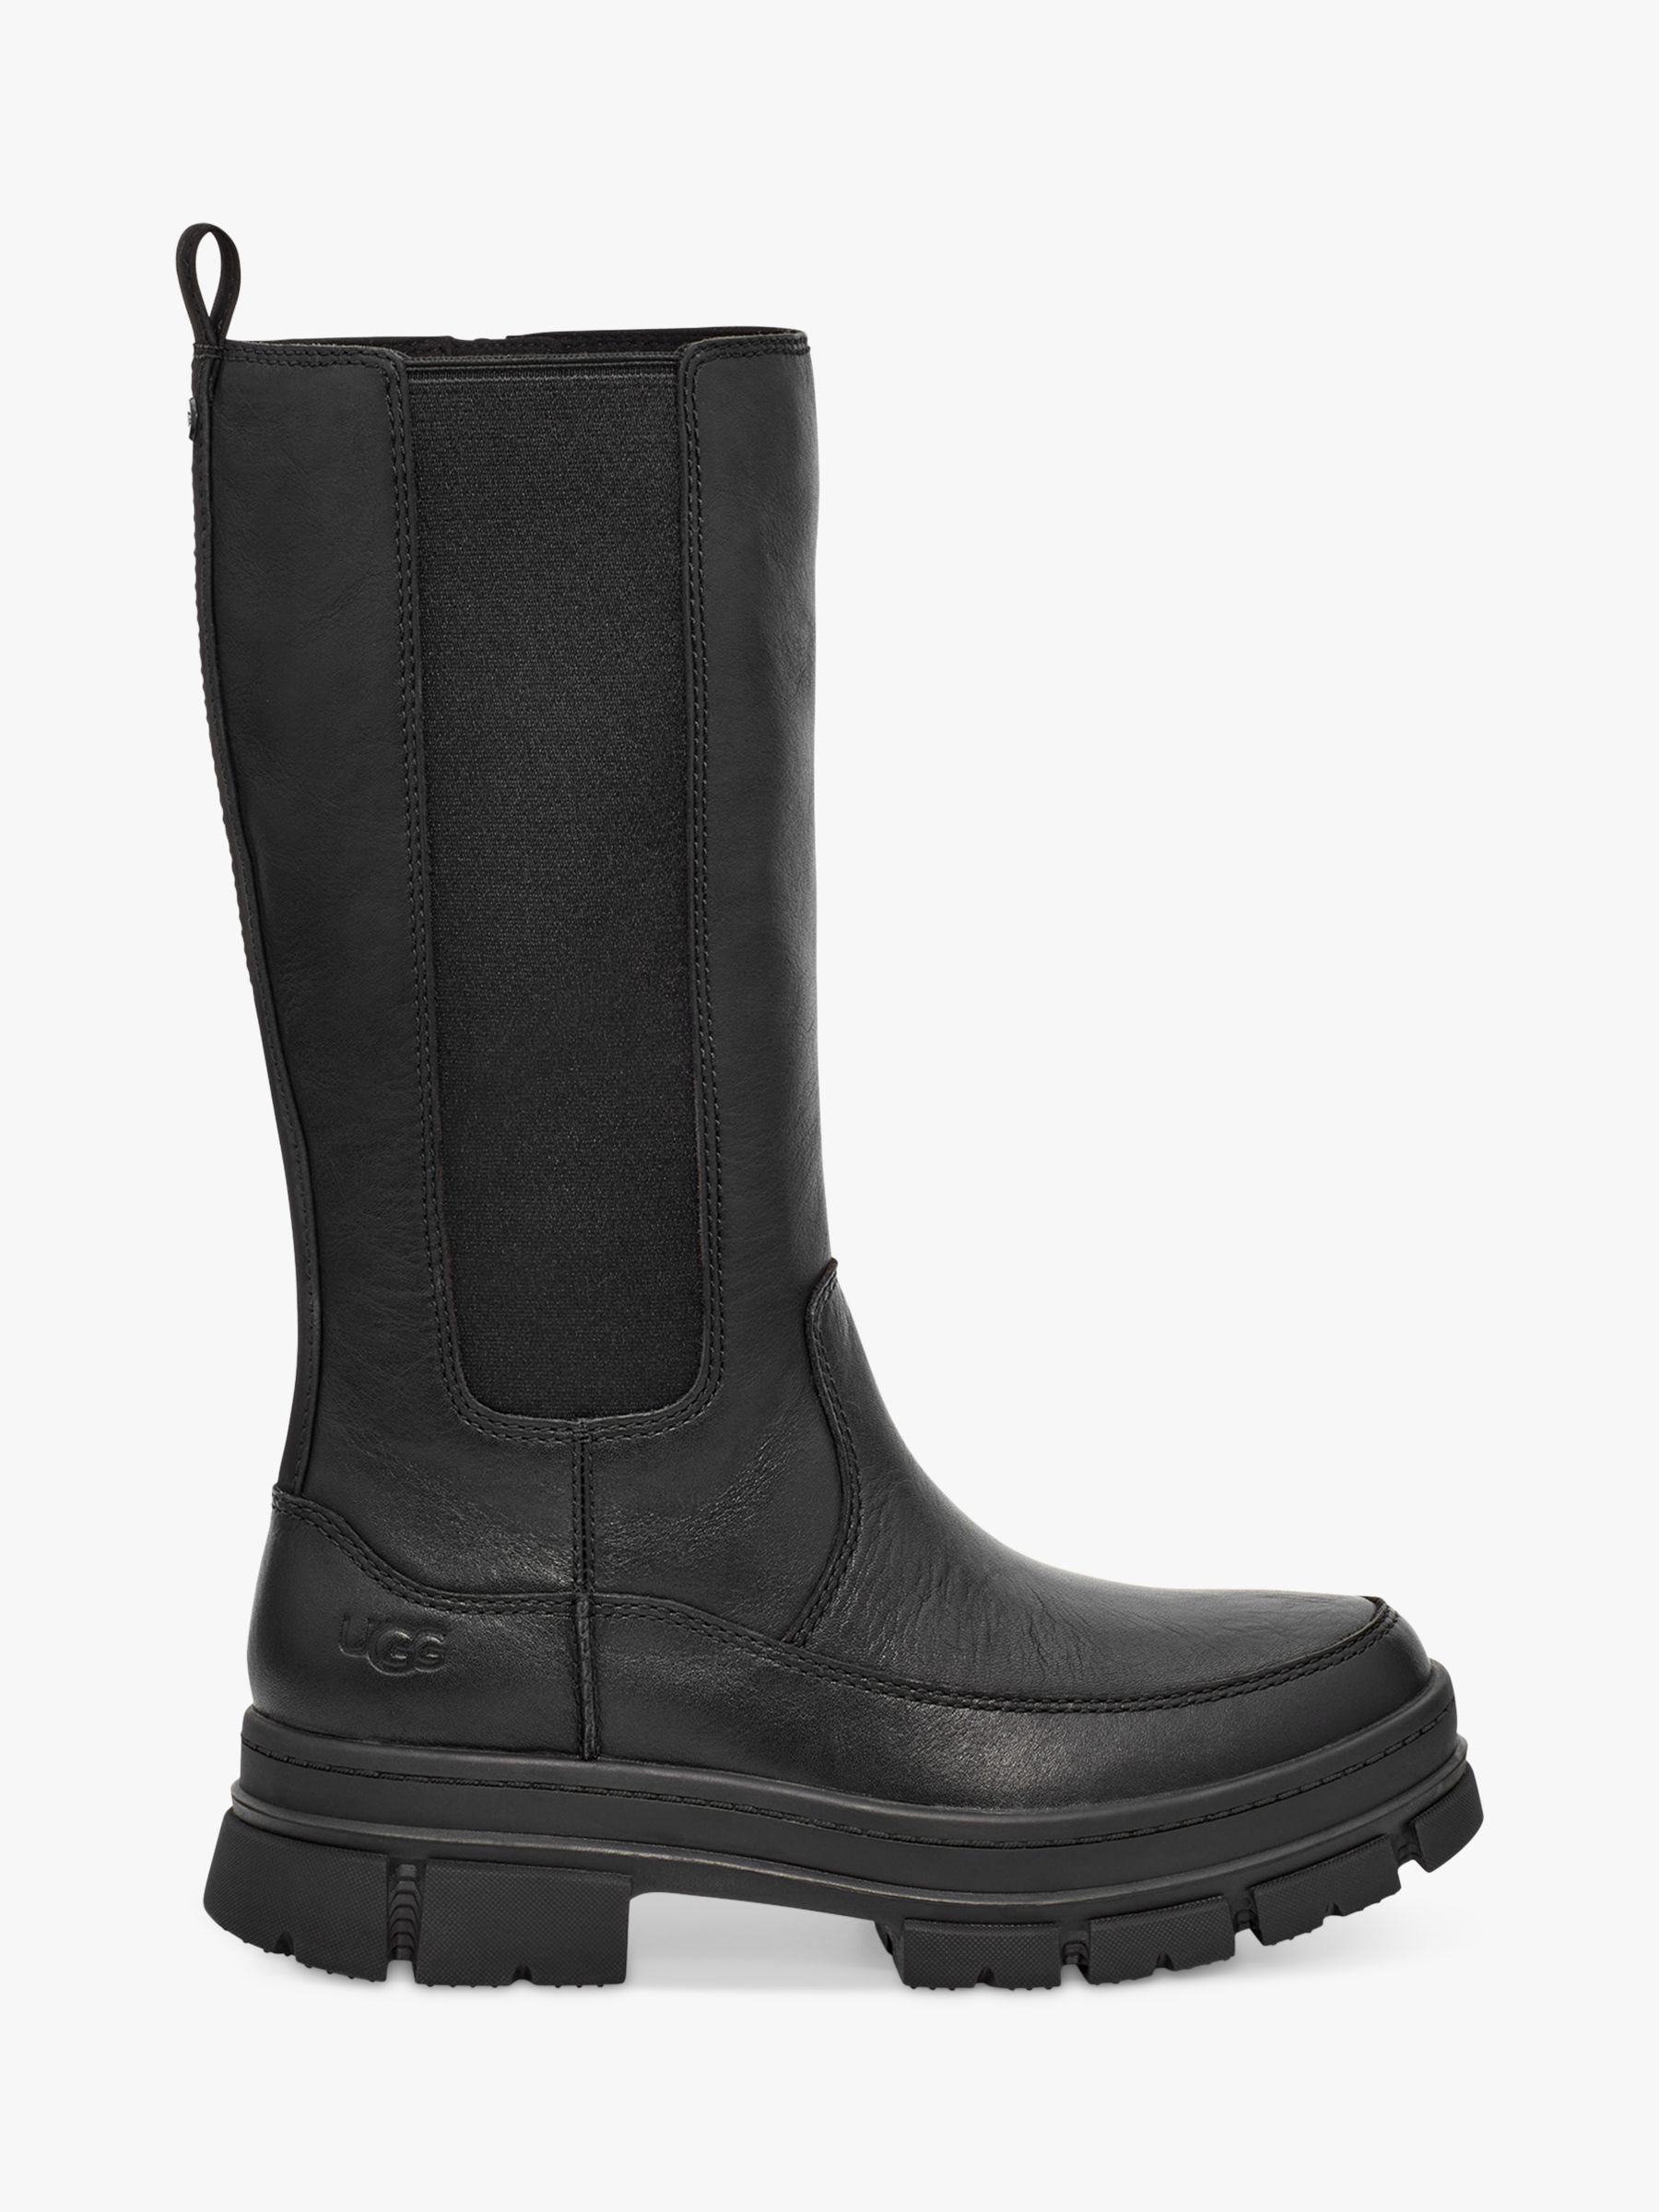 UGG Ashton Calf Leather Chelsea Boots, Black at John Lewis & Partners